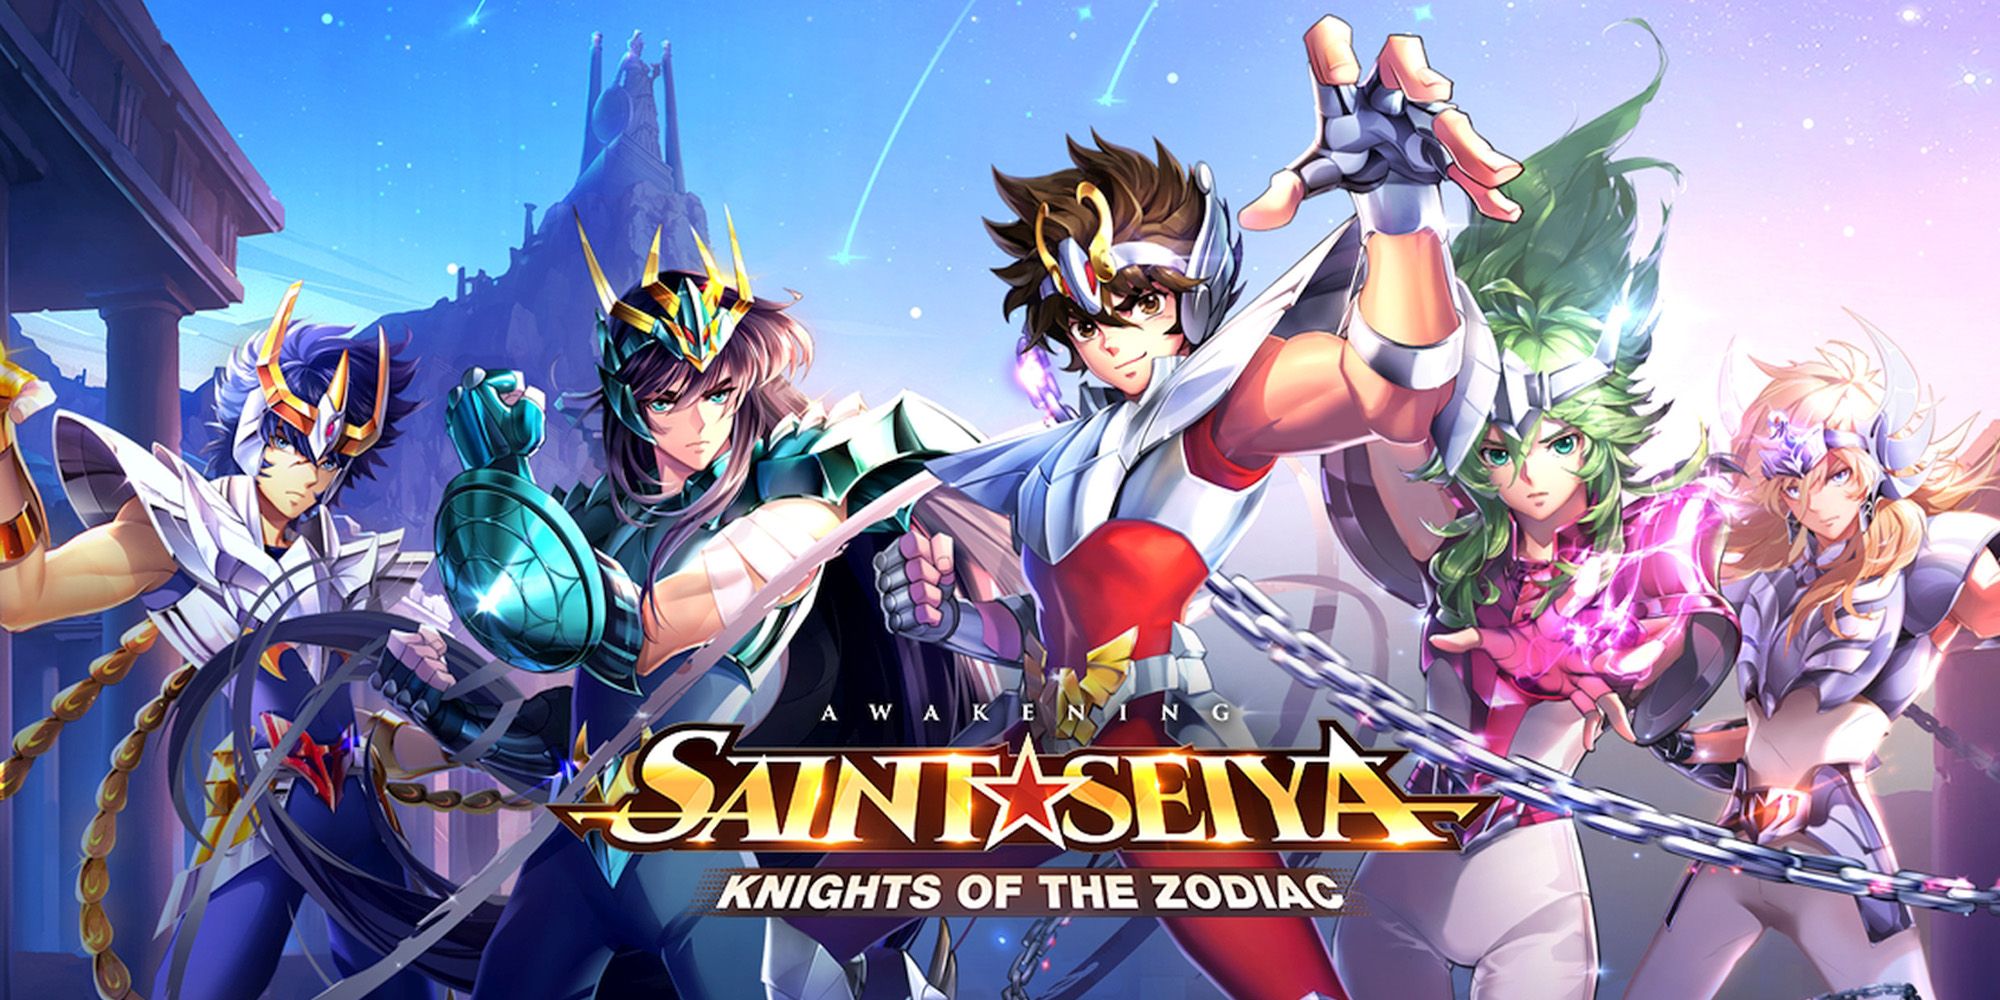 Art of Saint Seiya: Knights of the Zodiac